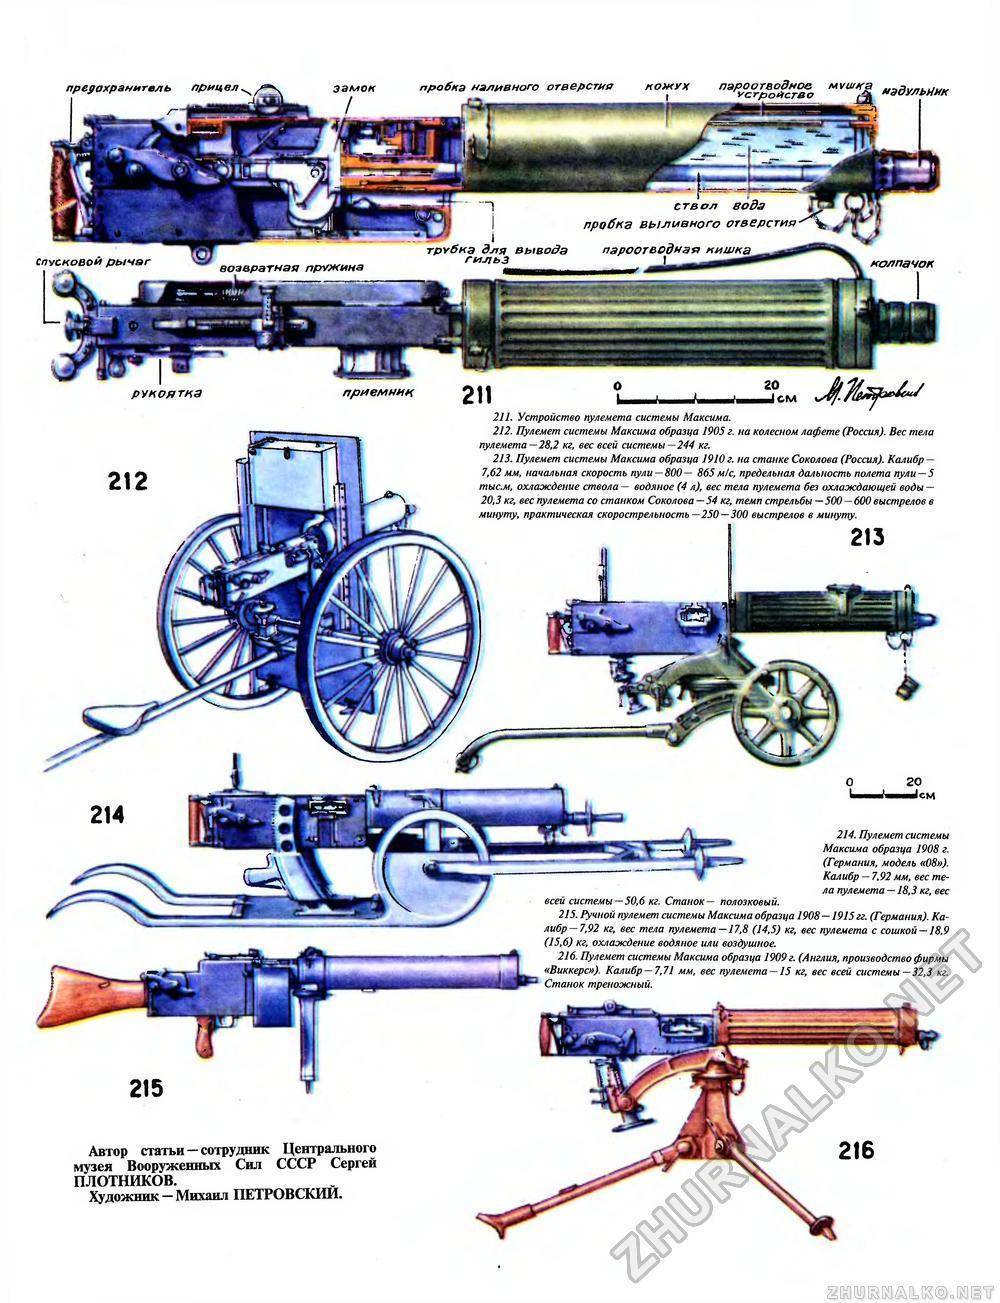 Пулемет максим образца 1910 года